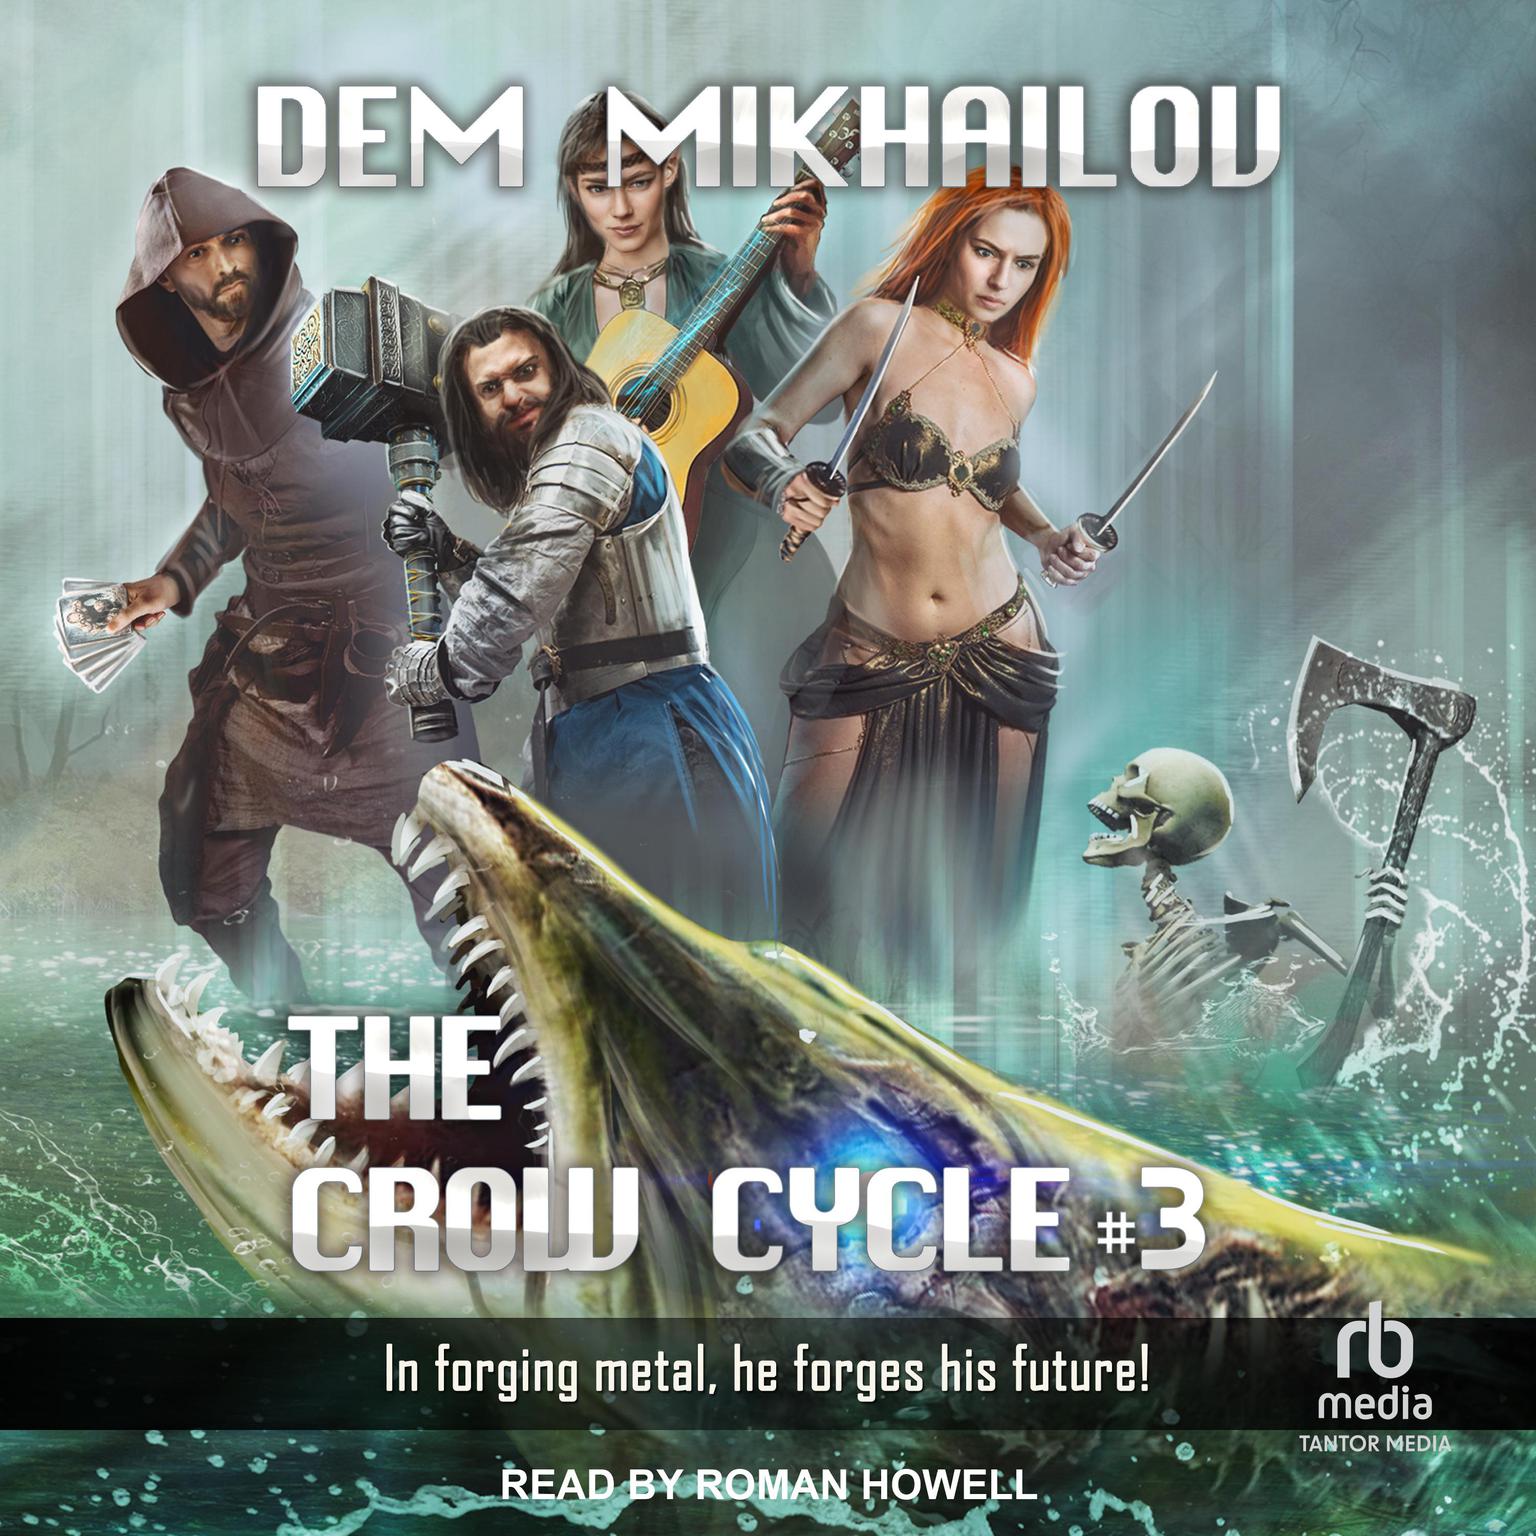 The Crow Cycle 3 Audiobook, by Dem Mikhailov